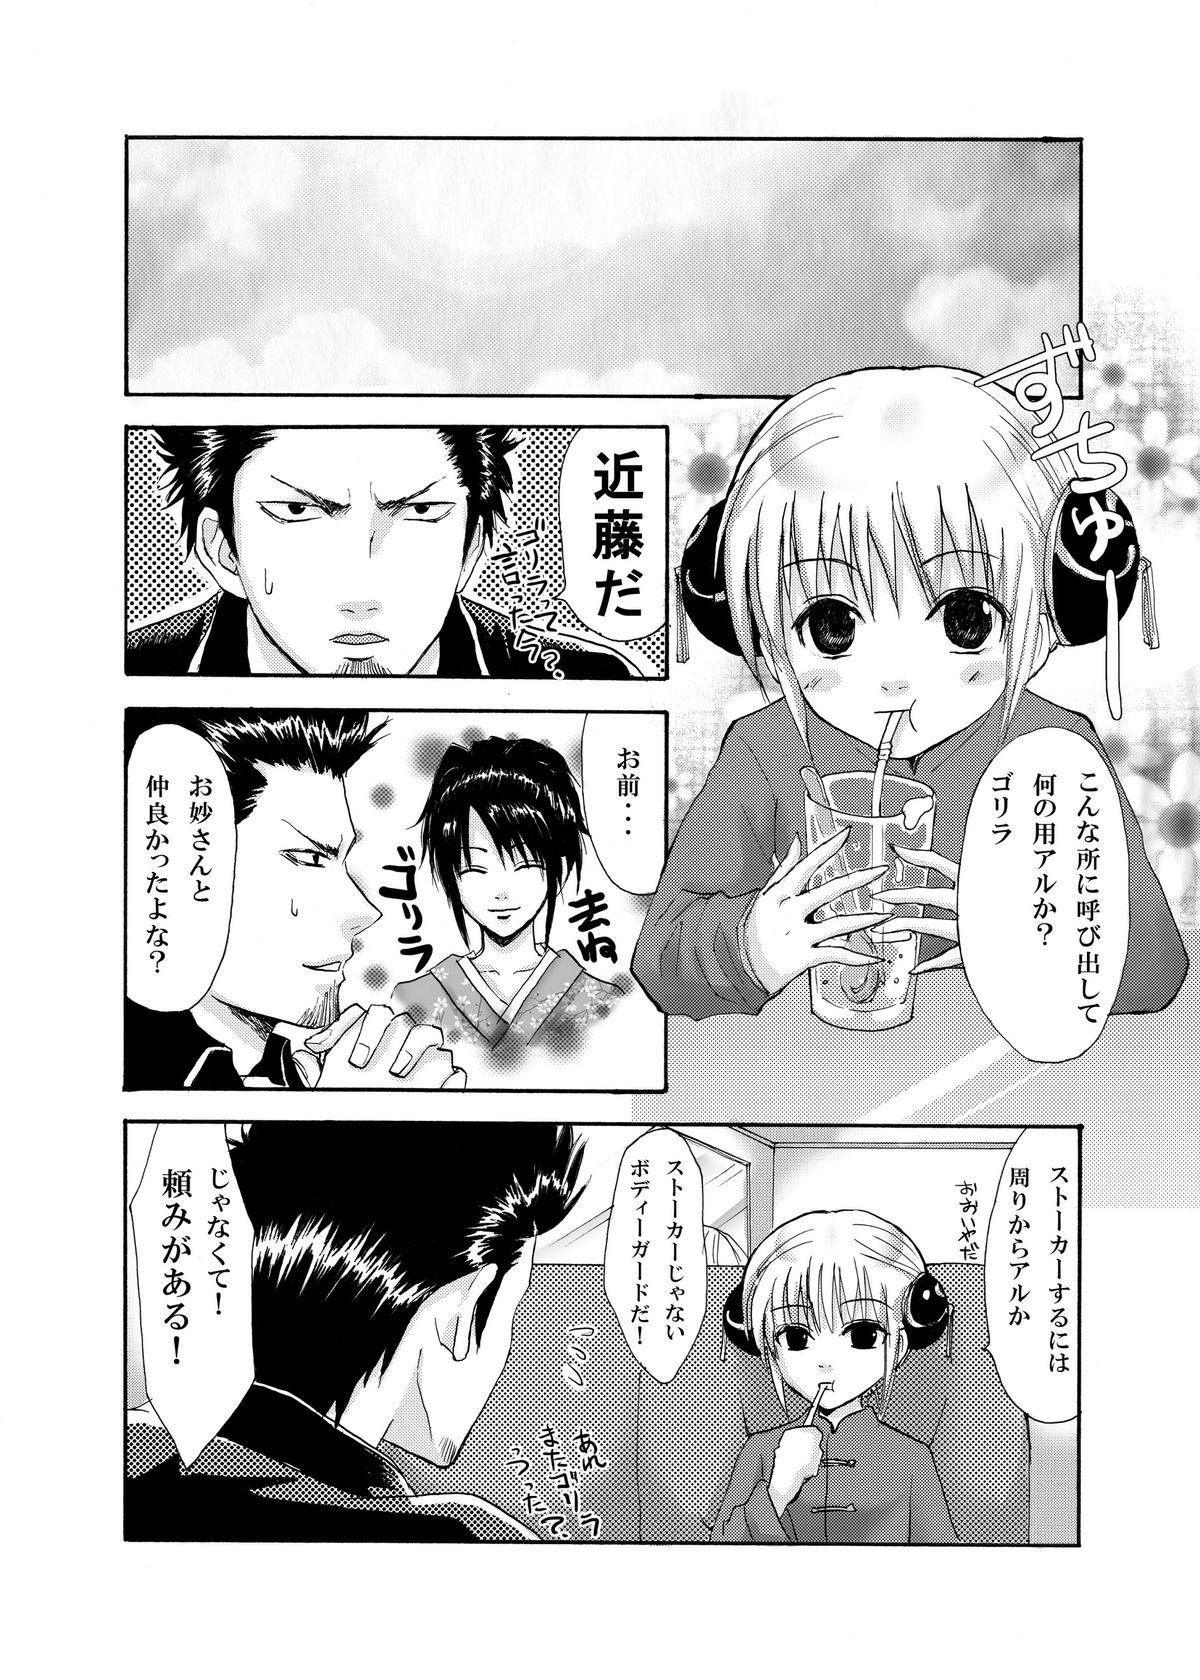 Whipping Rakutama - Gintama Climax - Page 6